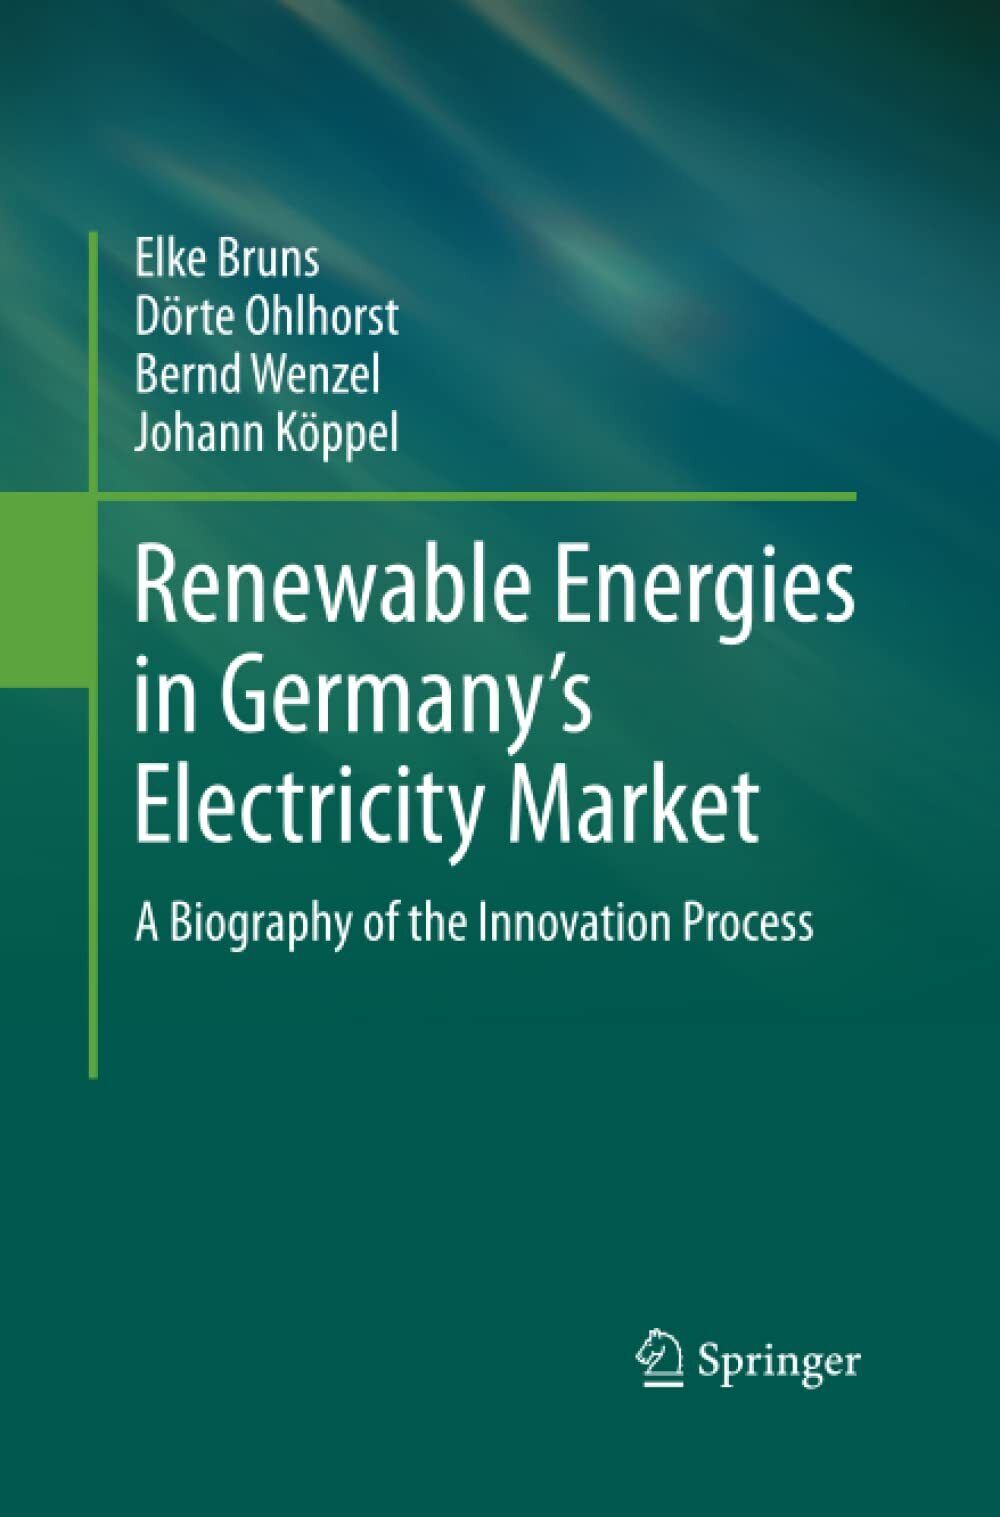 Renewable Energies in Germany?s Electricity Market - Springer, 2014